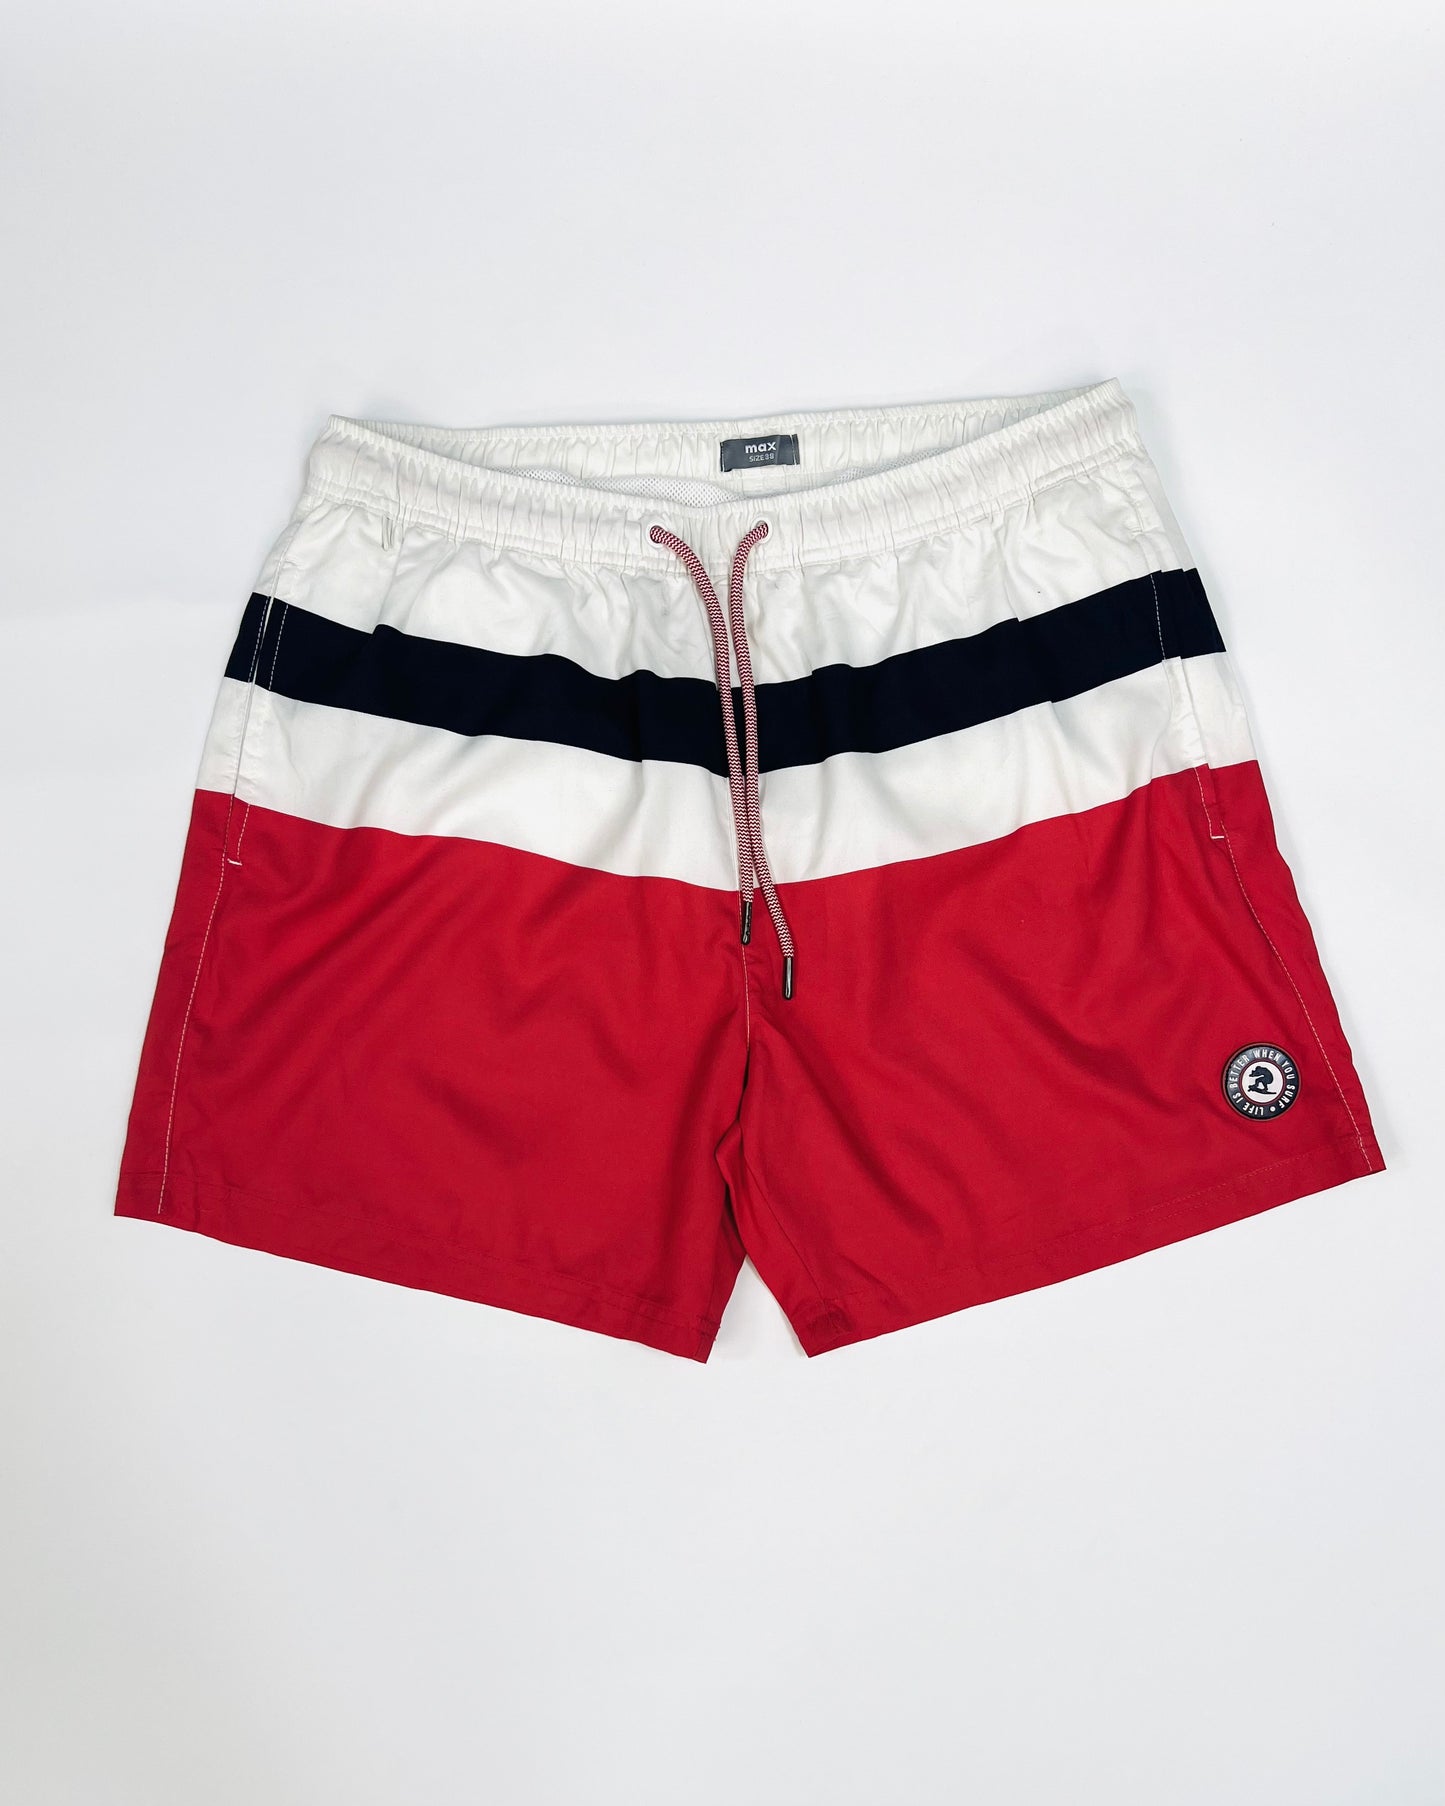 Max Colorblock Swim shorts in white/red